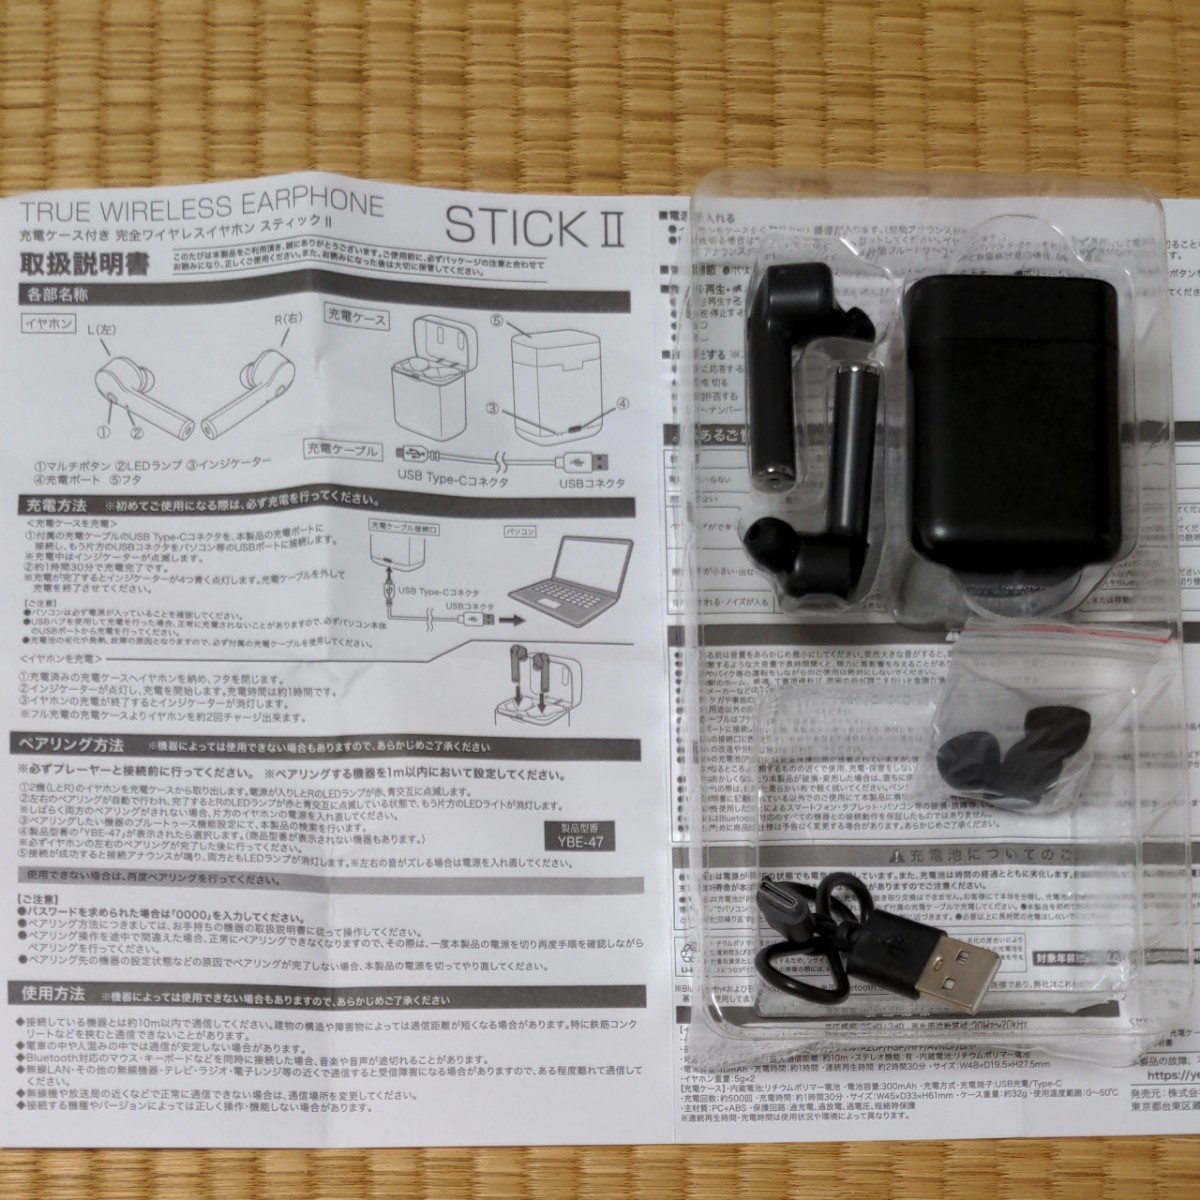 TRUE WIRELESS EARPHONE STICK スティック Ⅱ 充電ケース付き Bluetooth 5.0